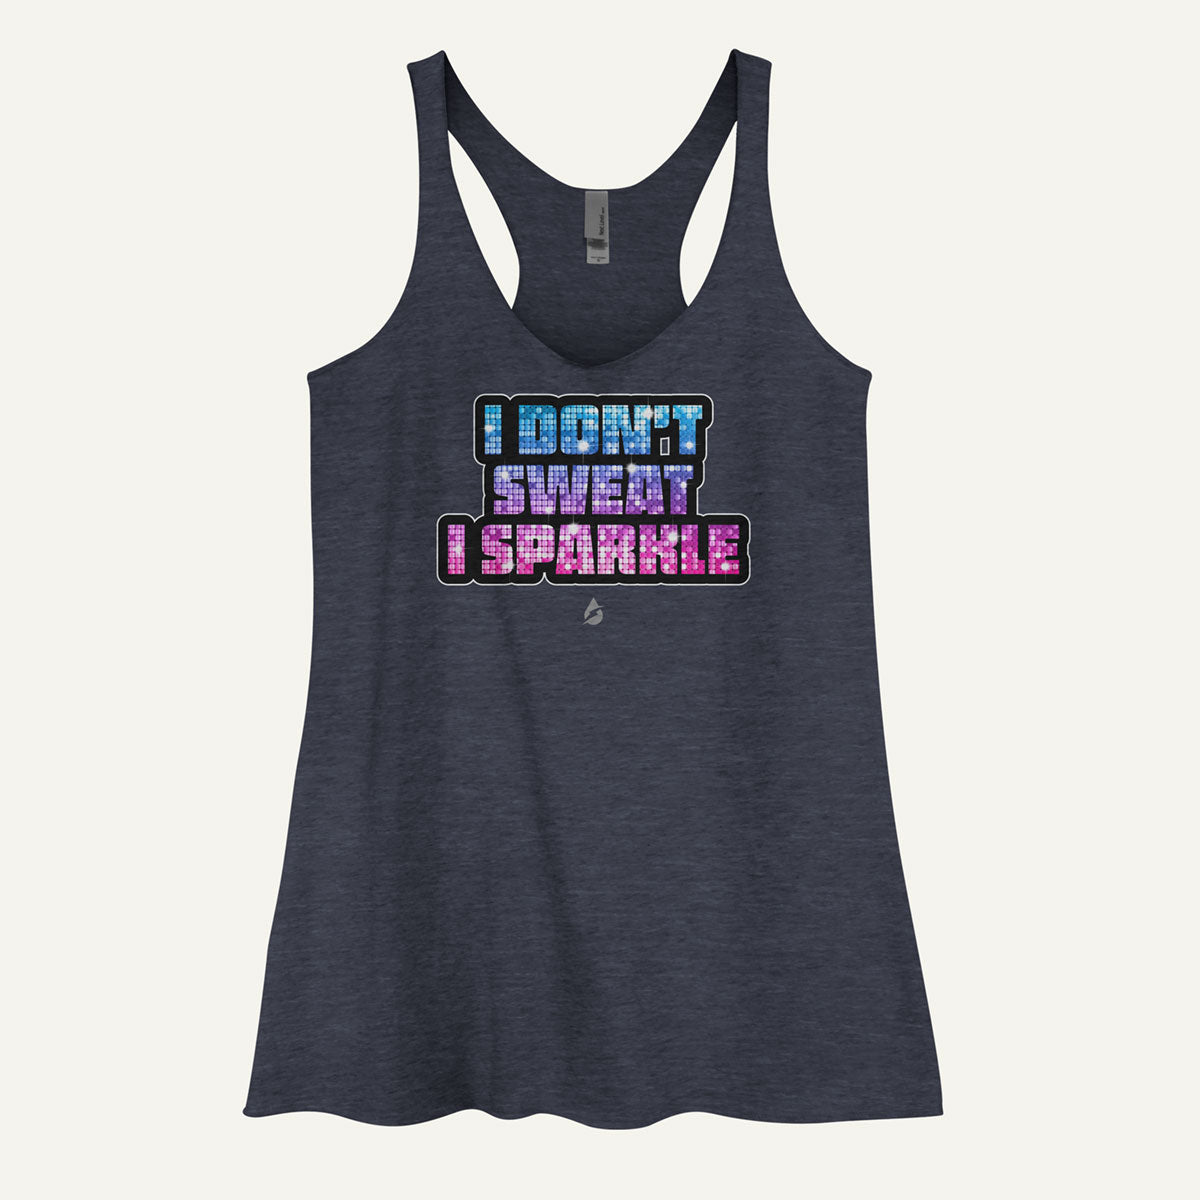 I Don't Sweat I Sparkle Women's Tank Top